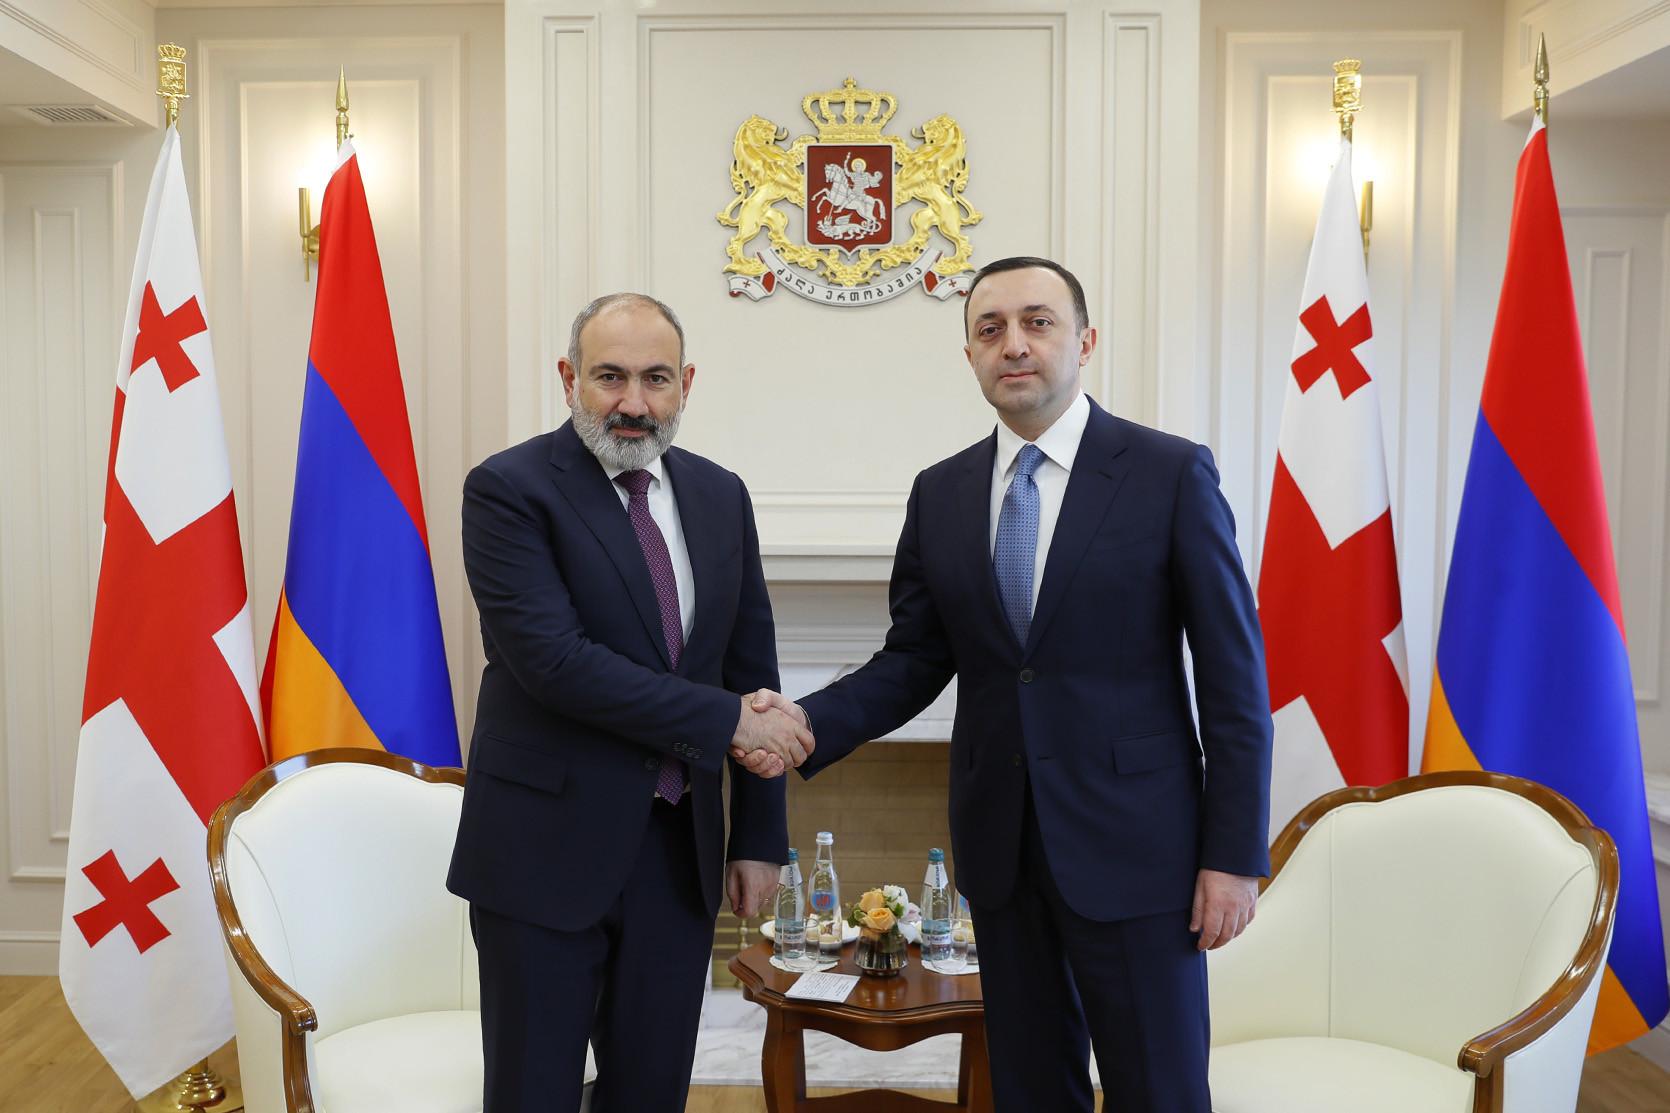 Pashinyan, Georgian Prime Minister Discuss Economic Relations